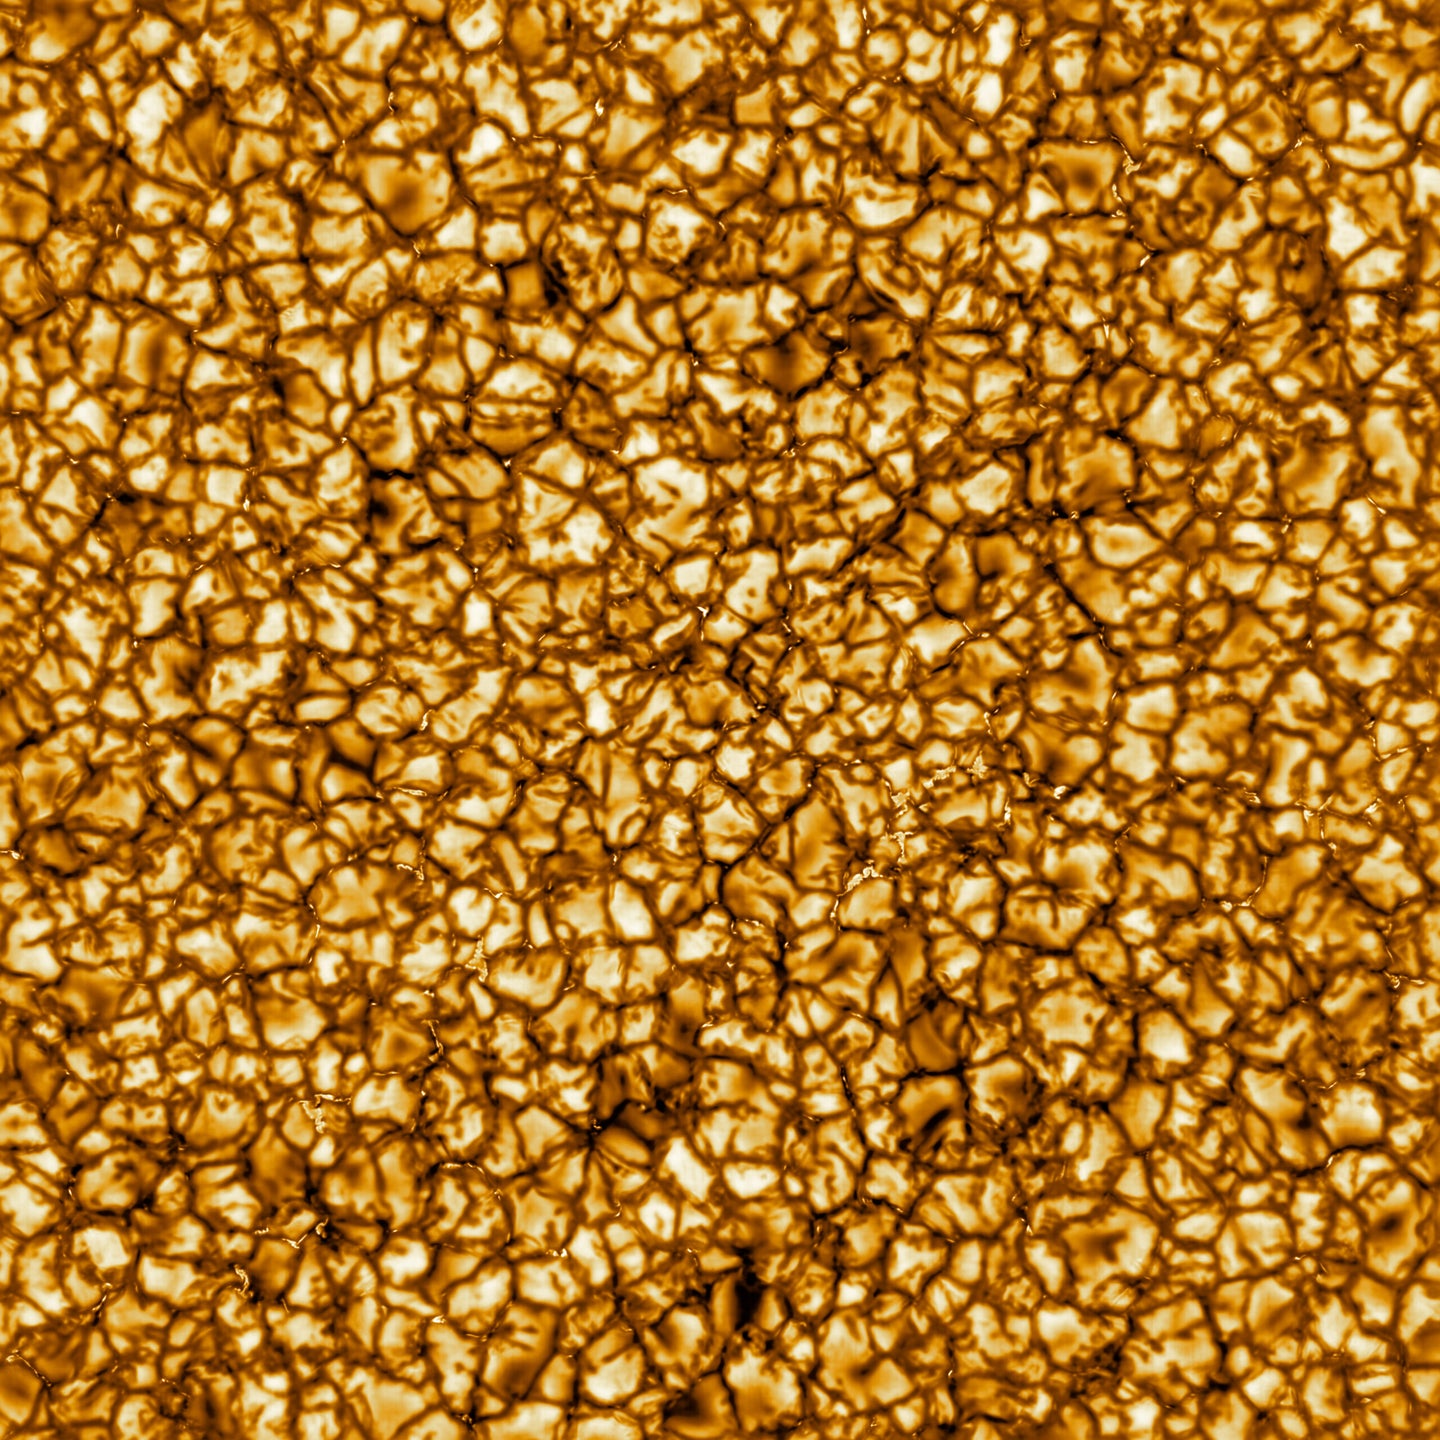 A closeup image of the sun's surface